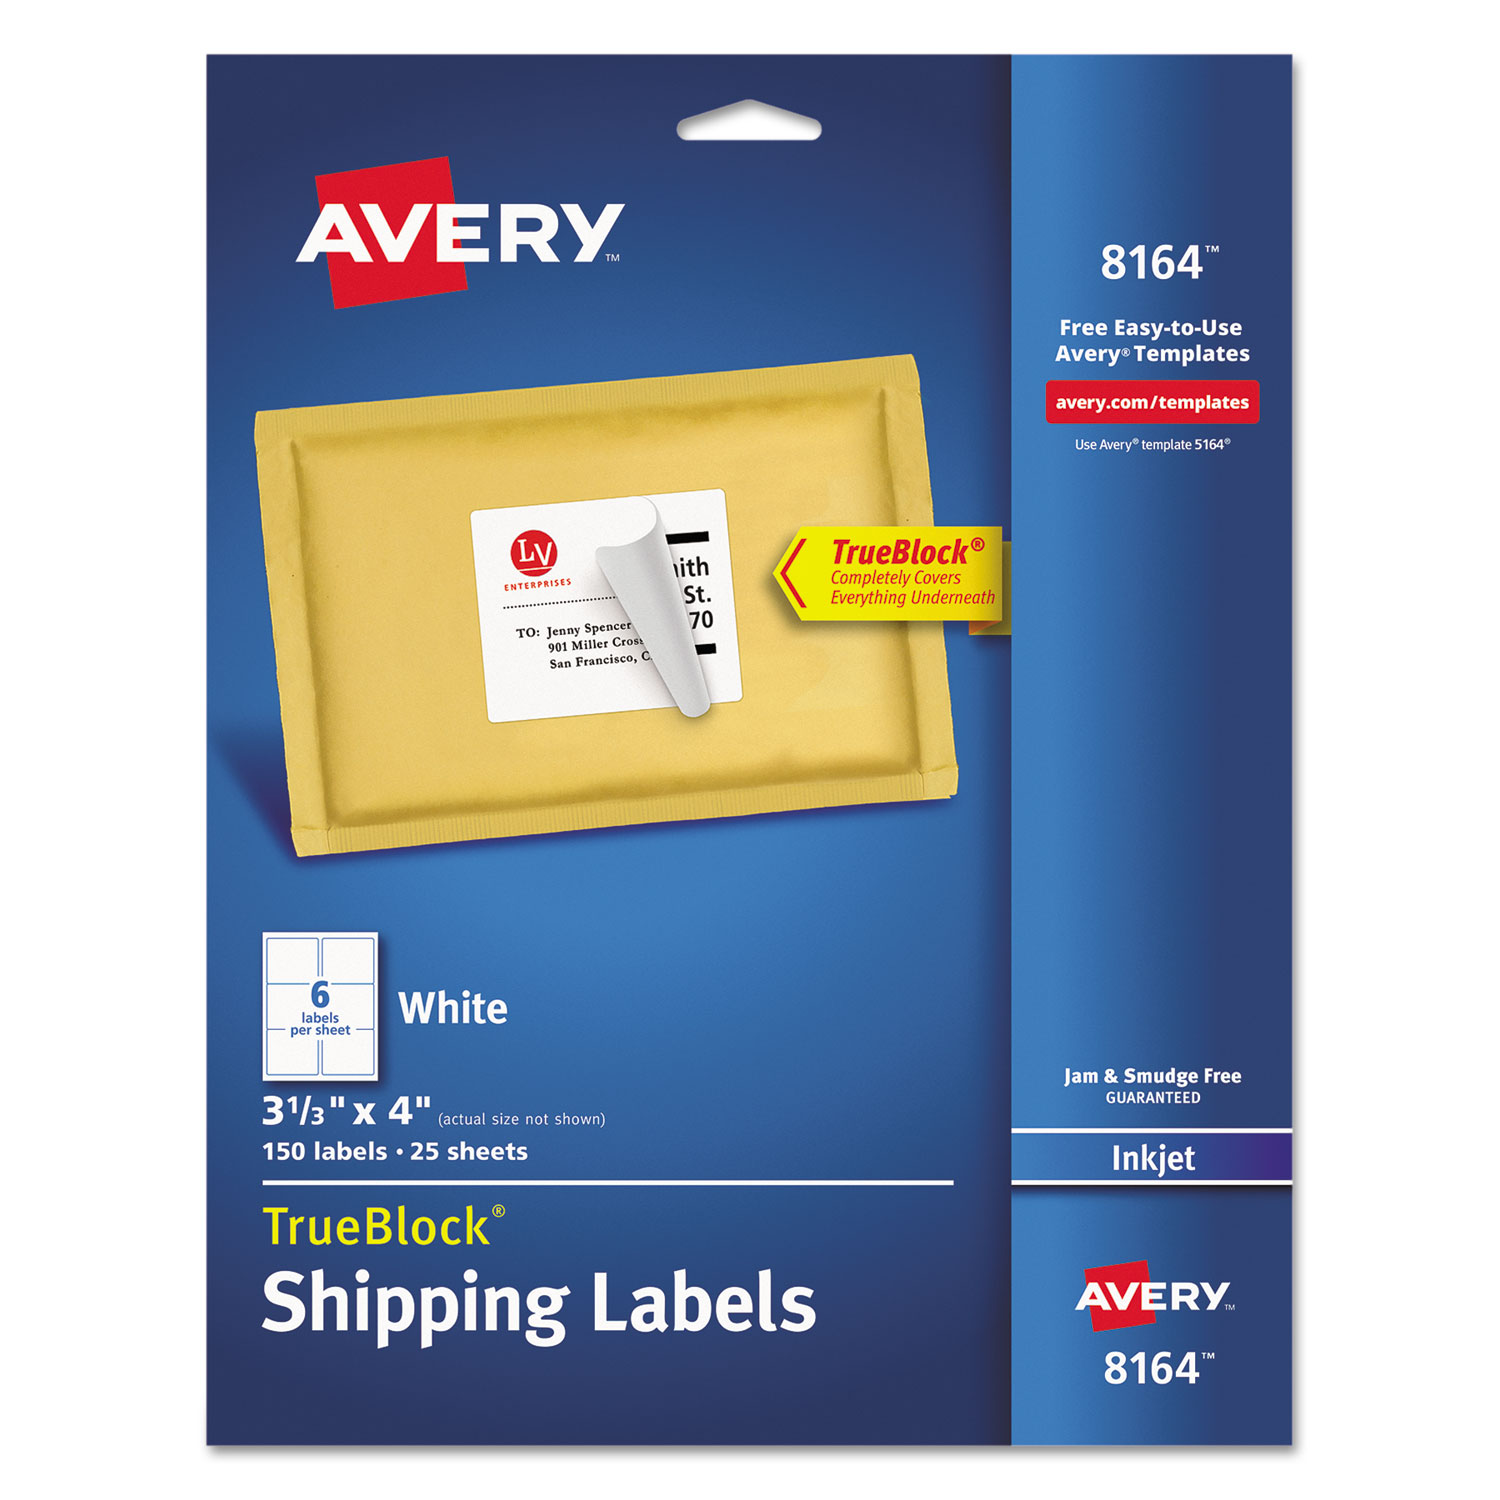  Avery 08164 Shipping Labels w/ TrueBlock Technology, Inkjet Printers, 3.33 x 4, White, 6/Sheet, 25 Sheets/Pack (AVE8164) 